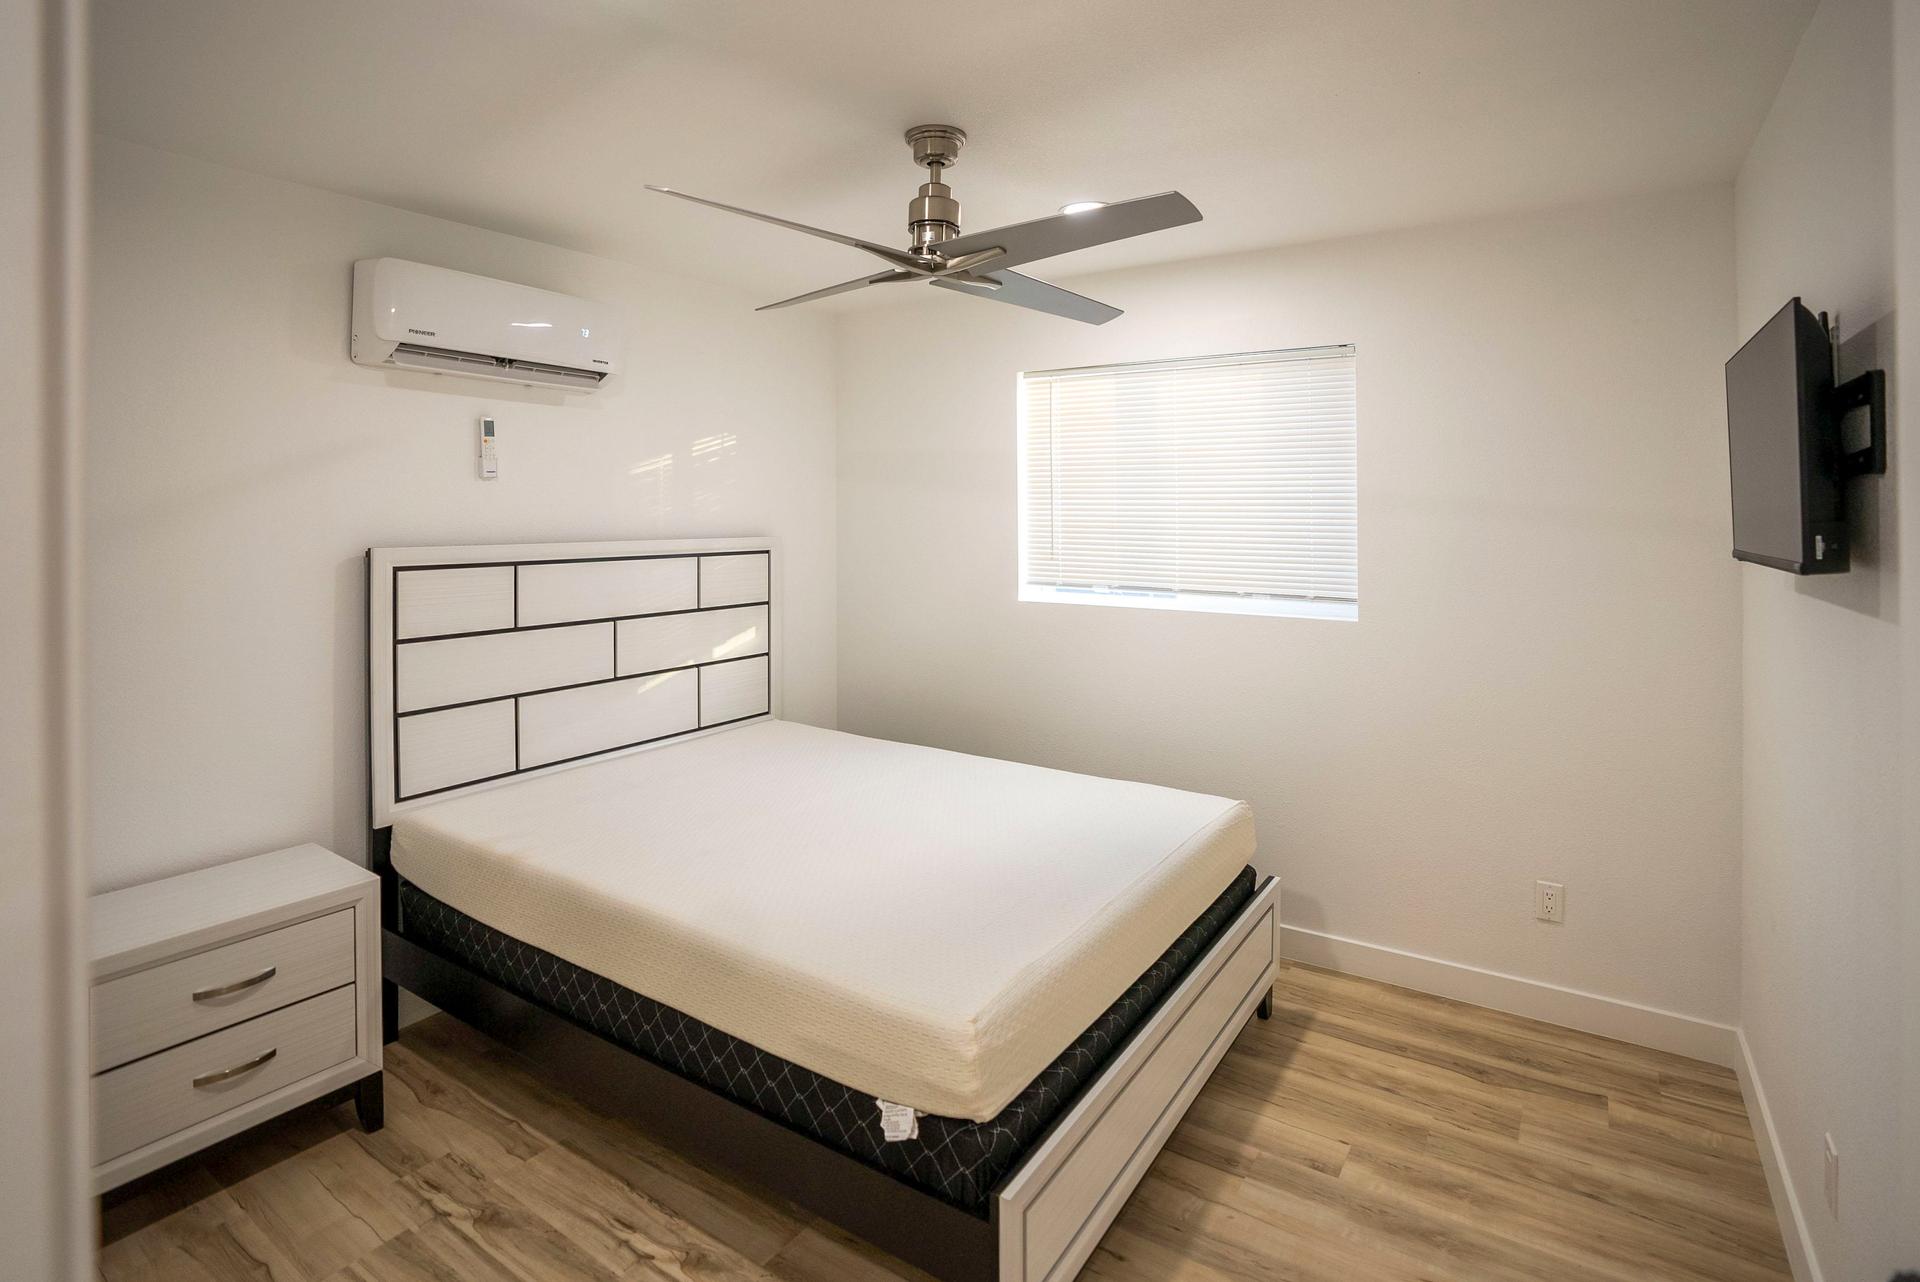 bedroom, detected:bed, ceiling fan